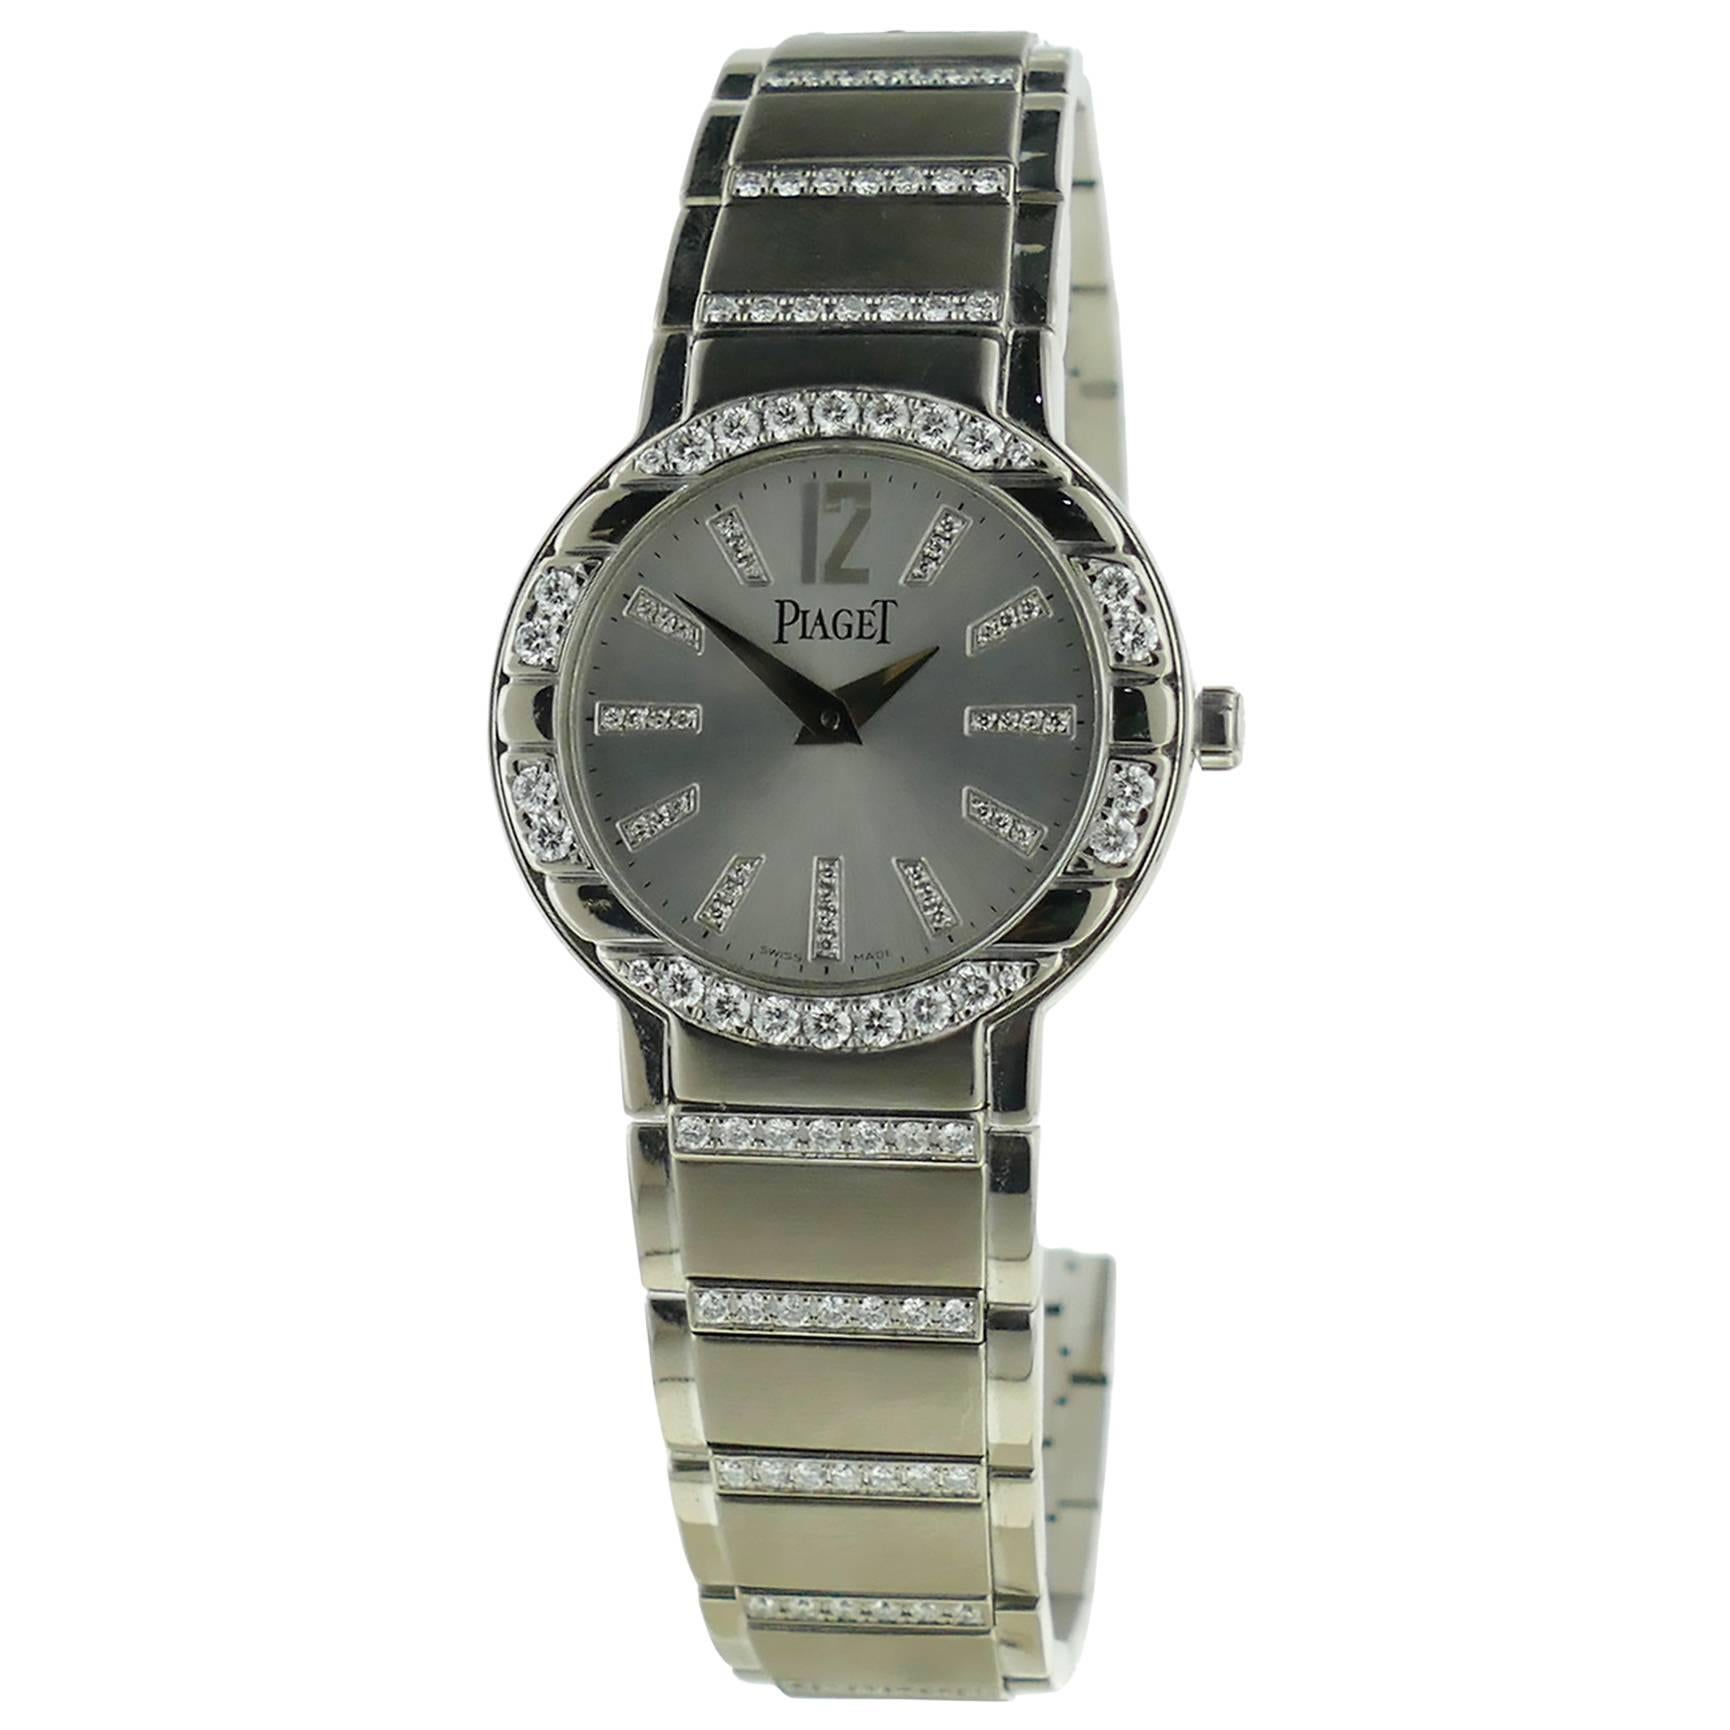 Ladies Piaget Polo 18k White Gold Watch W/ Diamonds Ref G0A36233 Retails $66, 000